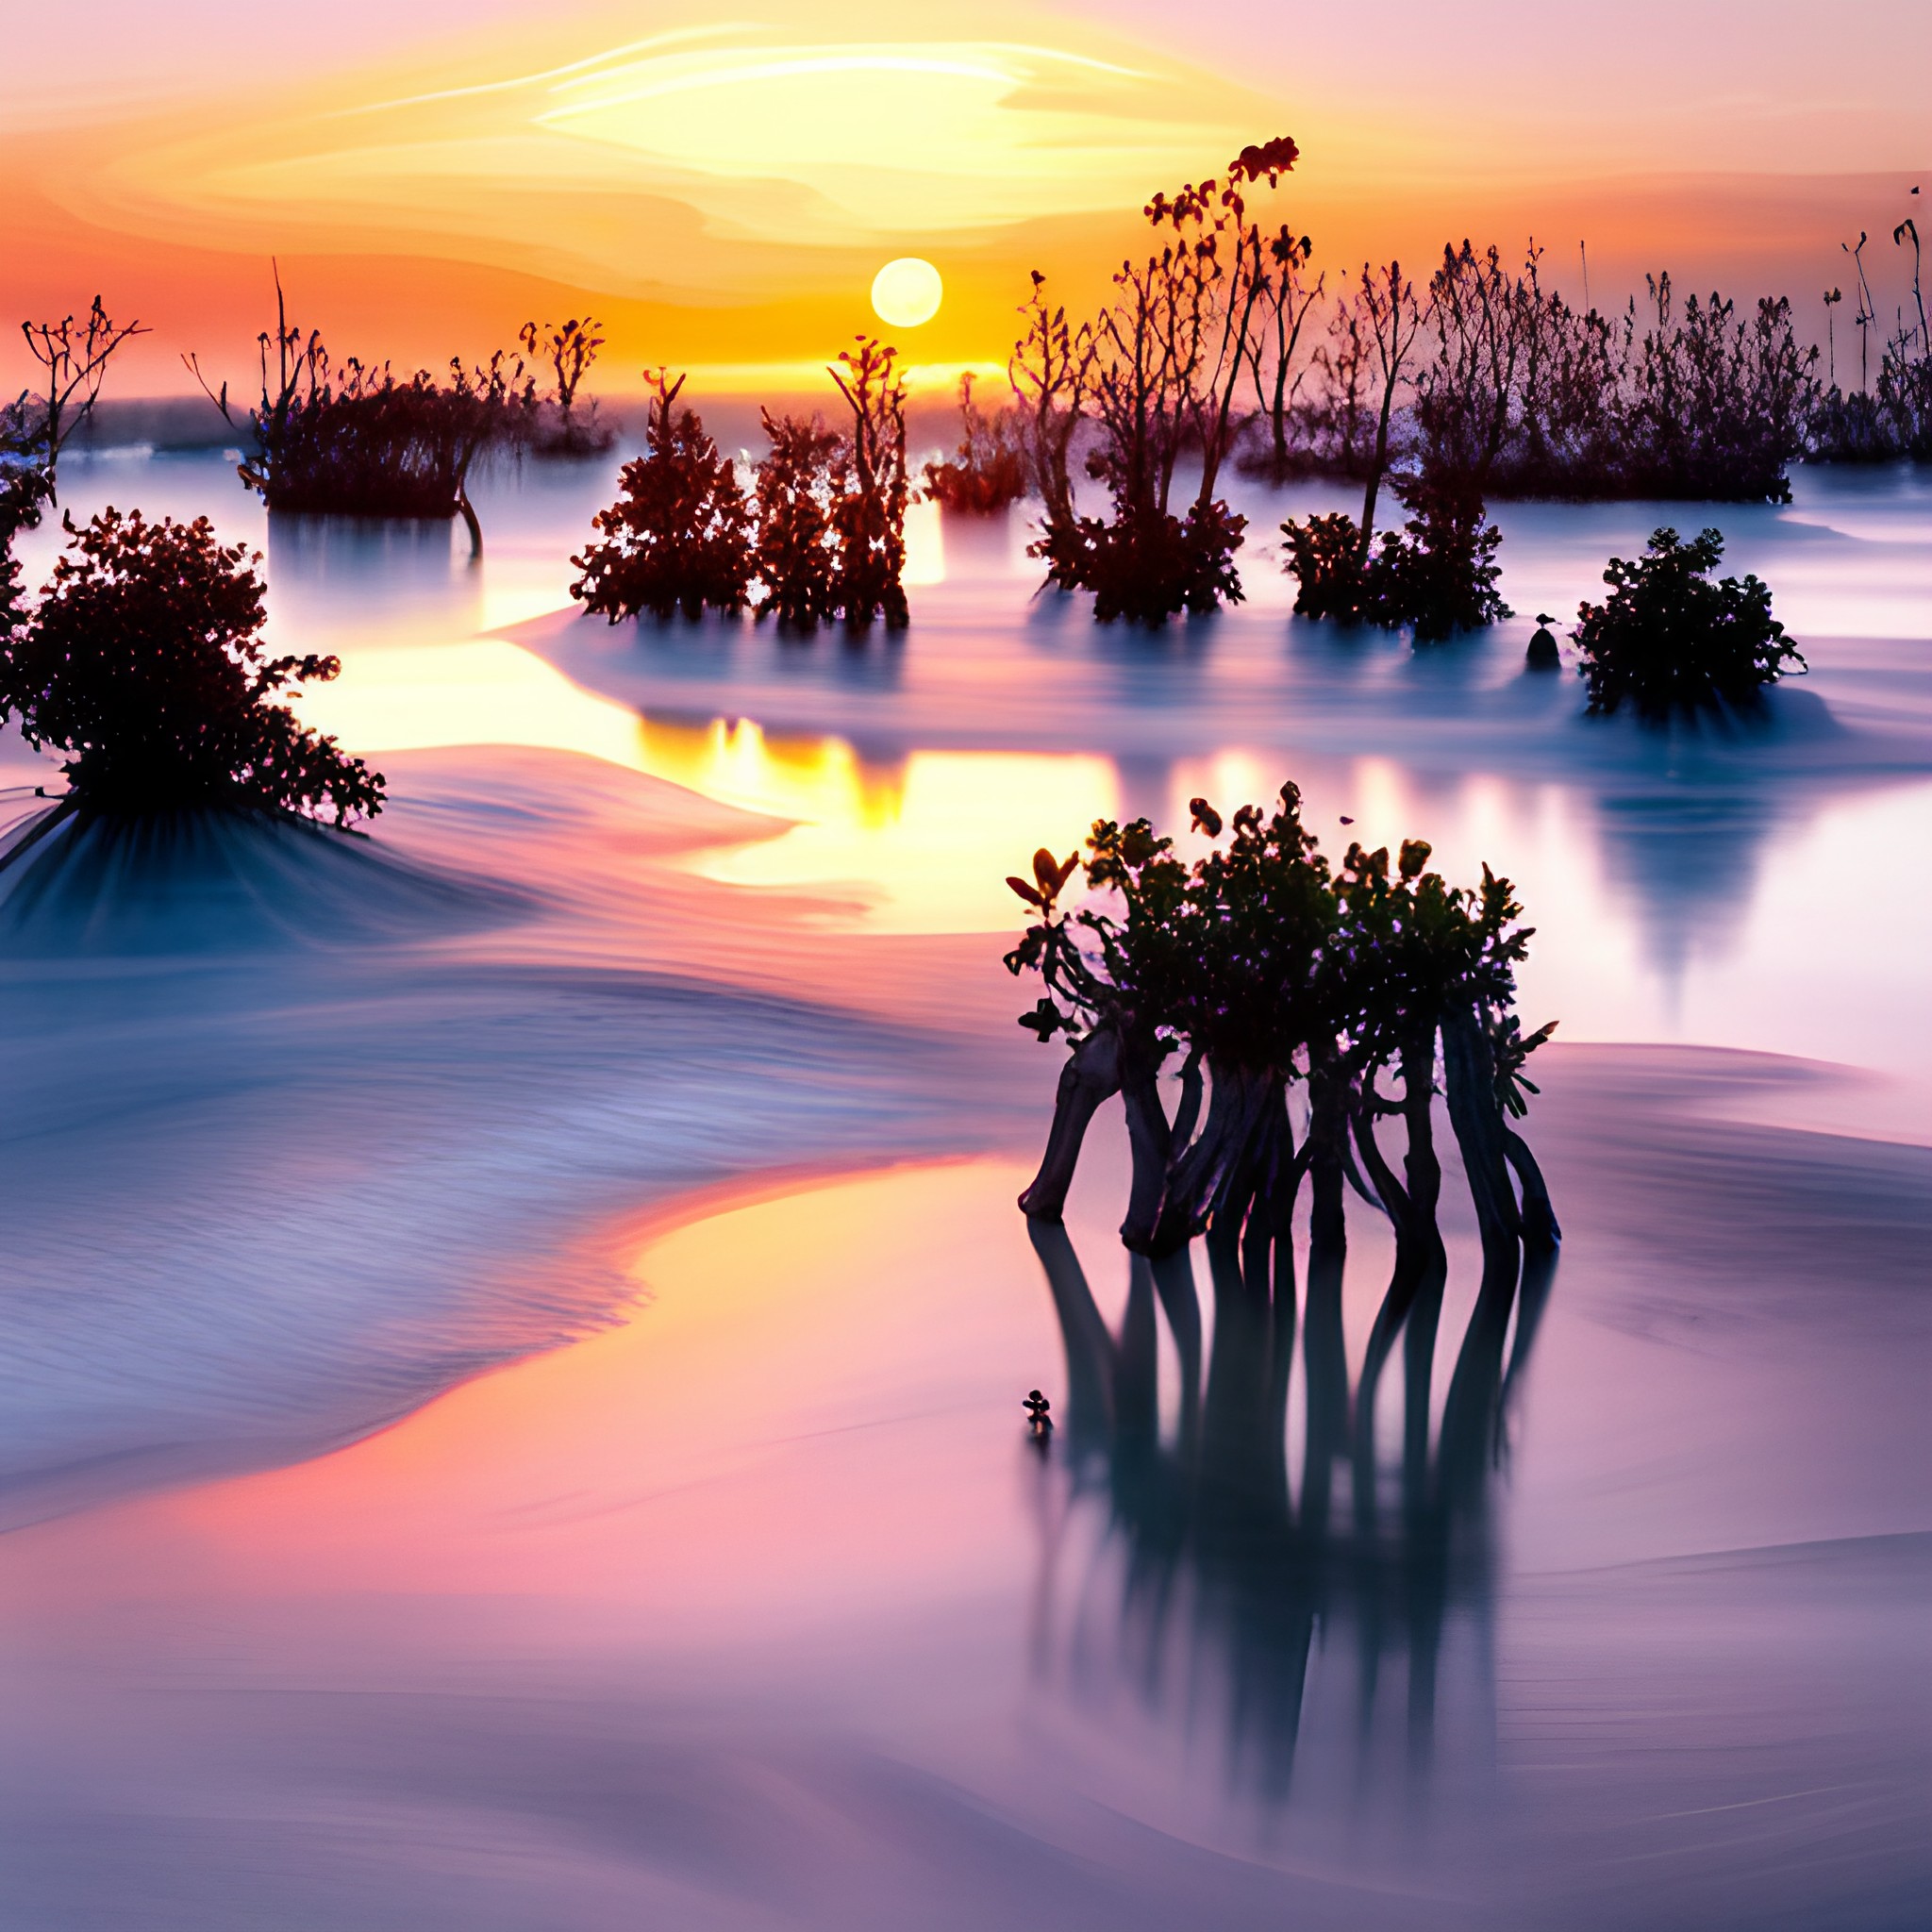 Florida Everglades inspired image